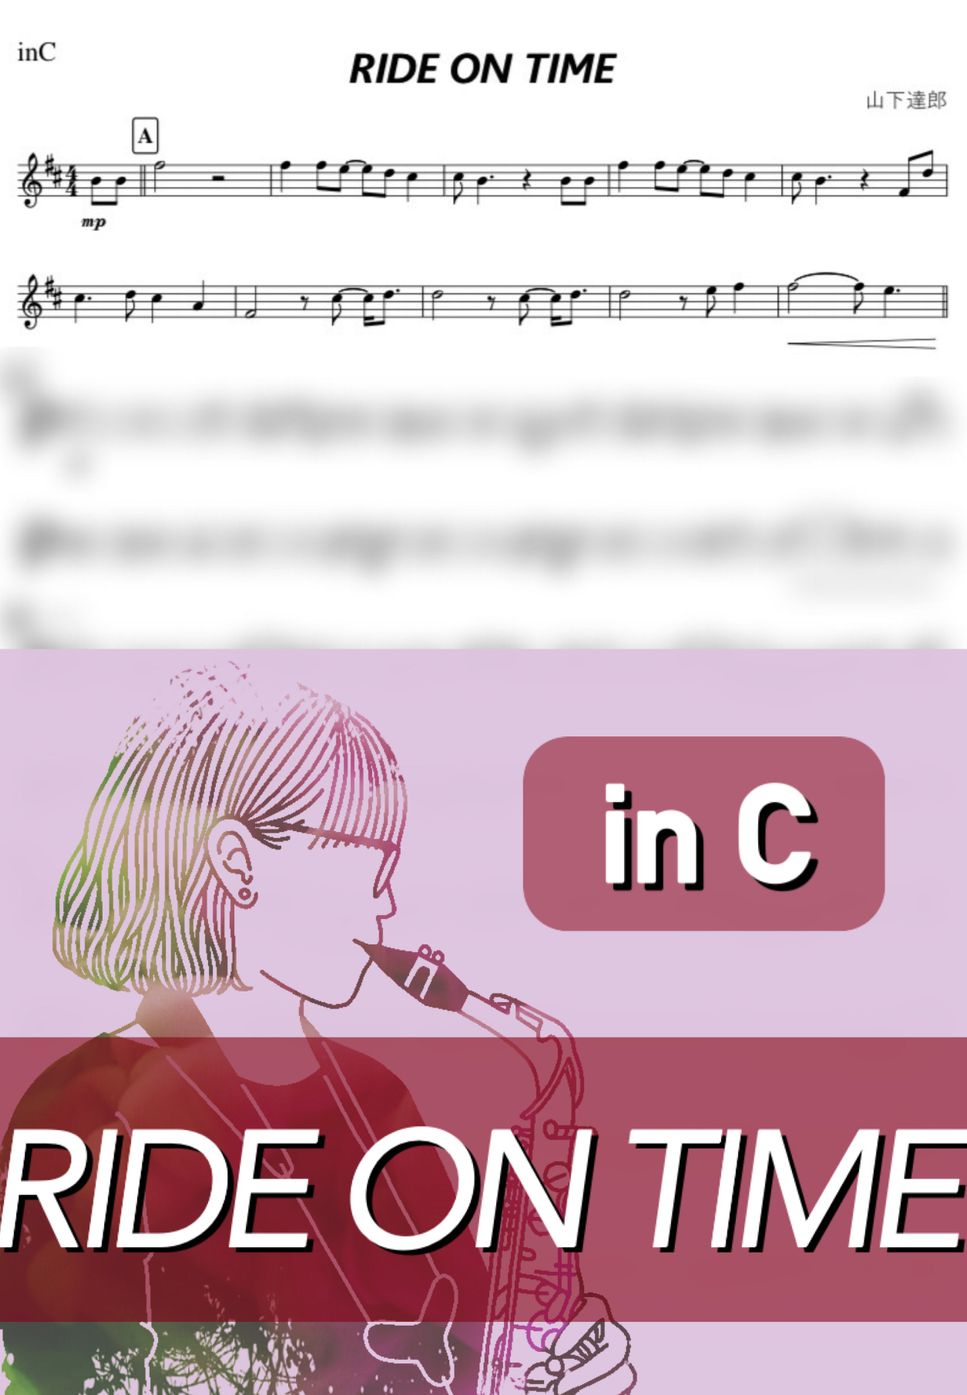 山下達郎 - RIDE ON TIME (C) by kanamusic